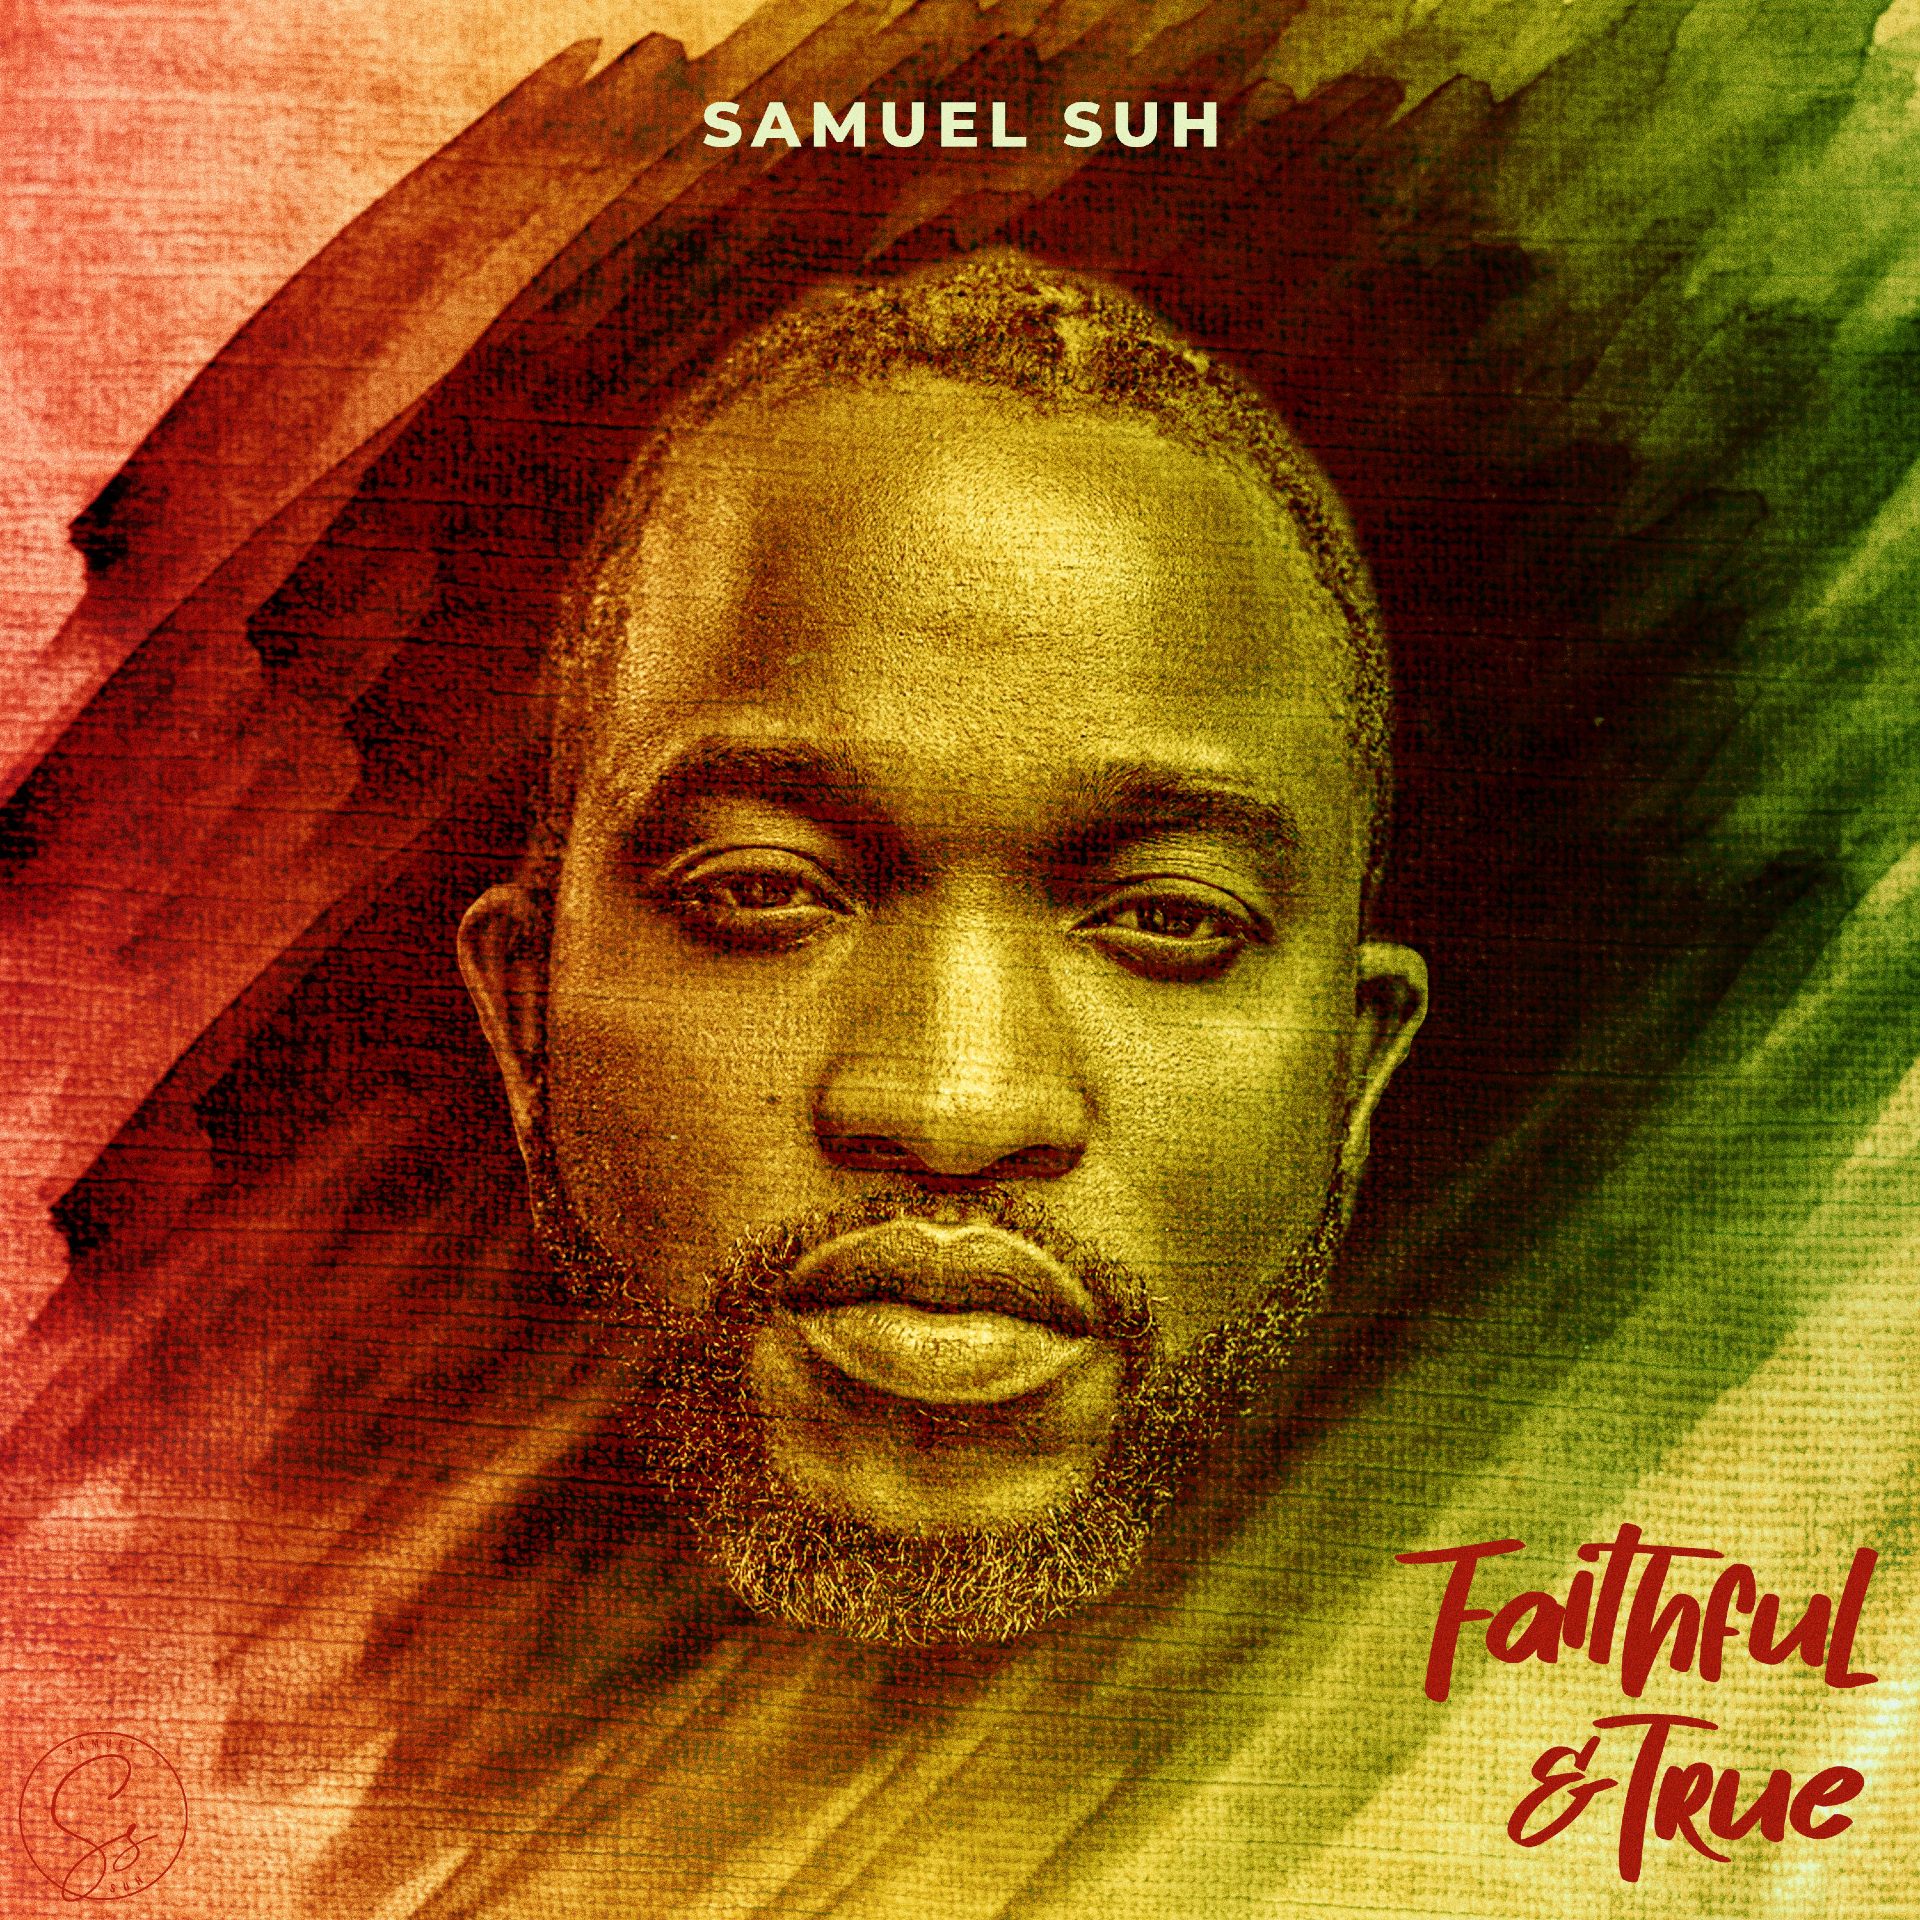 Samuel Suh - Faithful and True